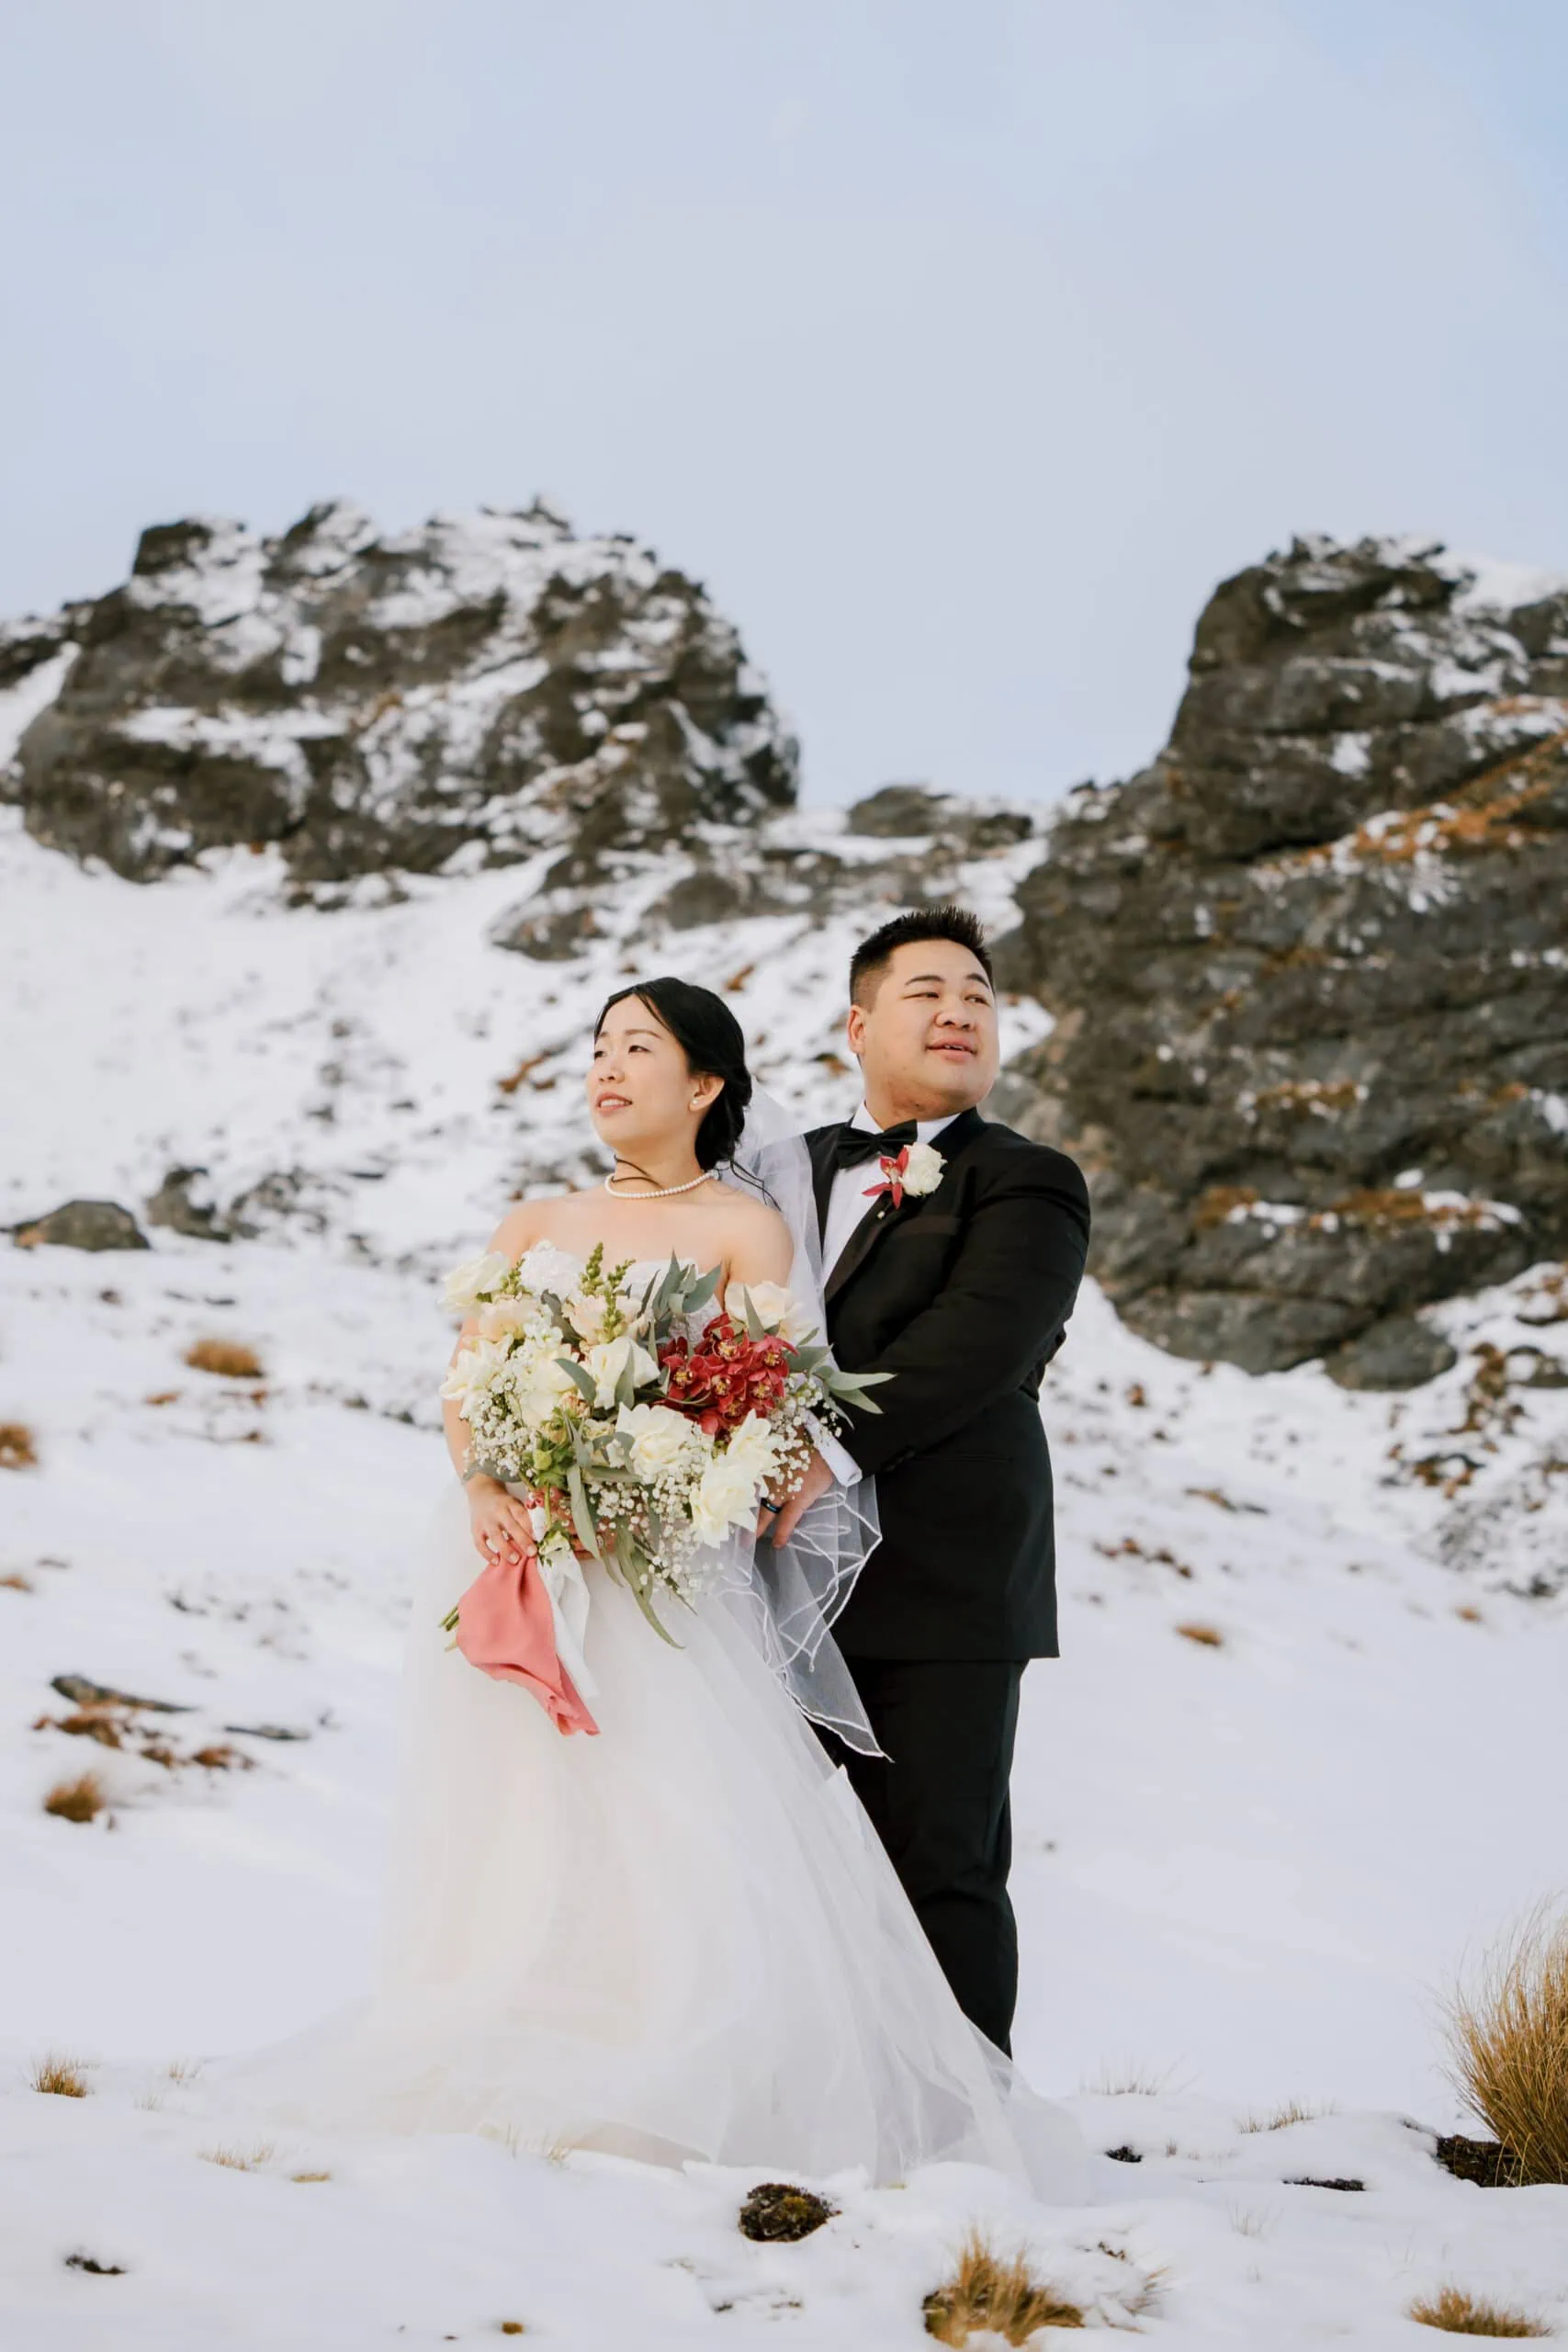 Queenstown New Zealand Elopement Wedding Photographer - Lam and Wendy's mountain wedding.